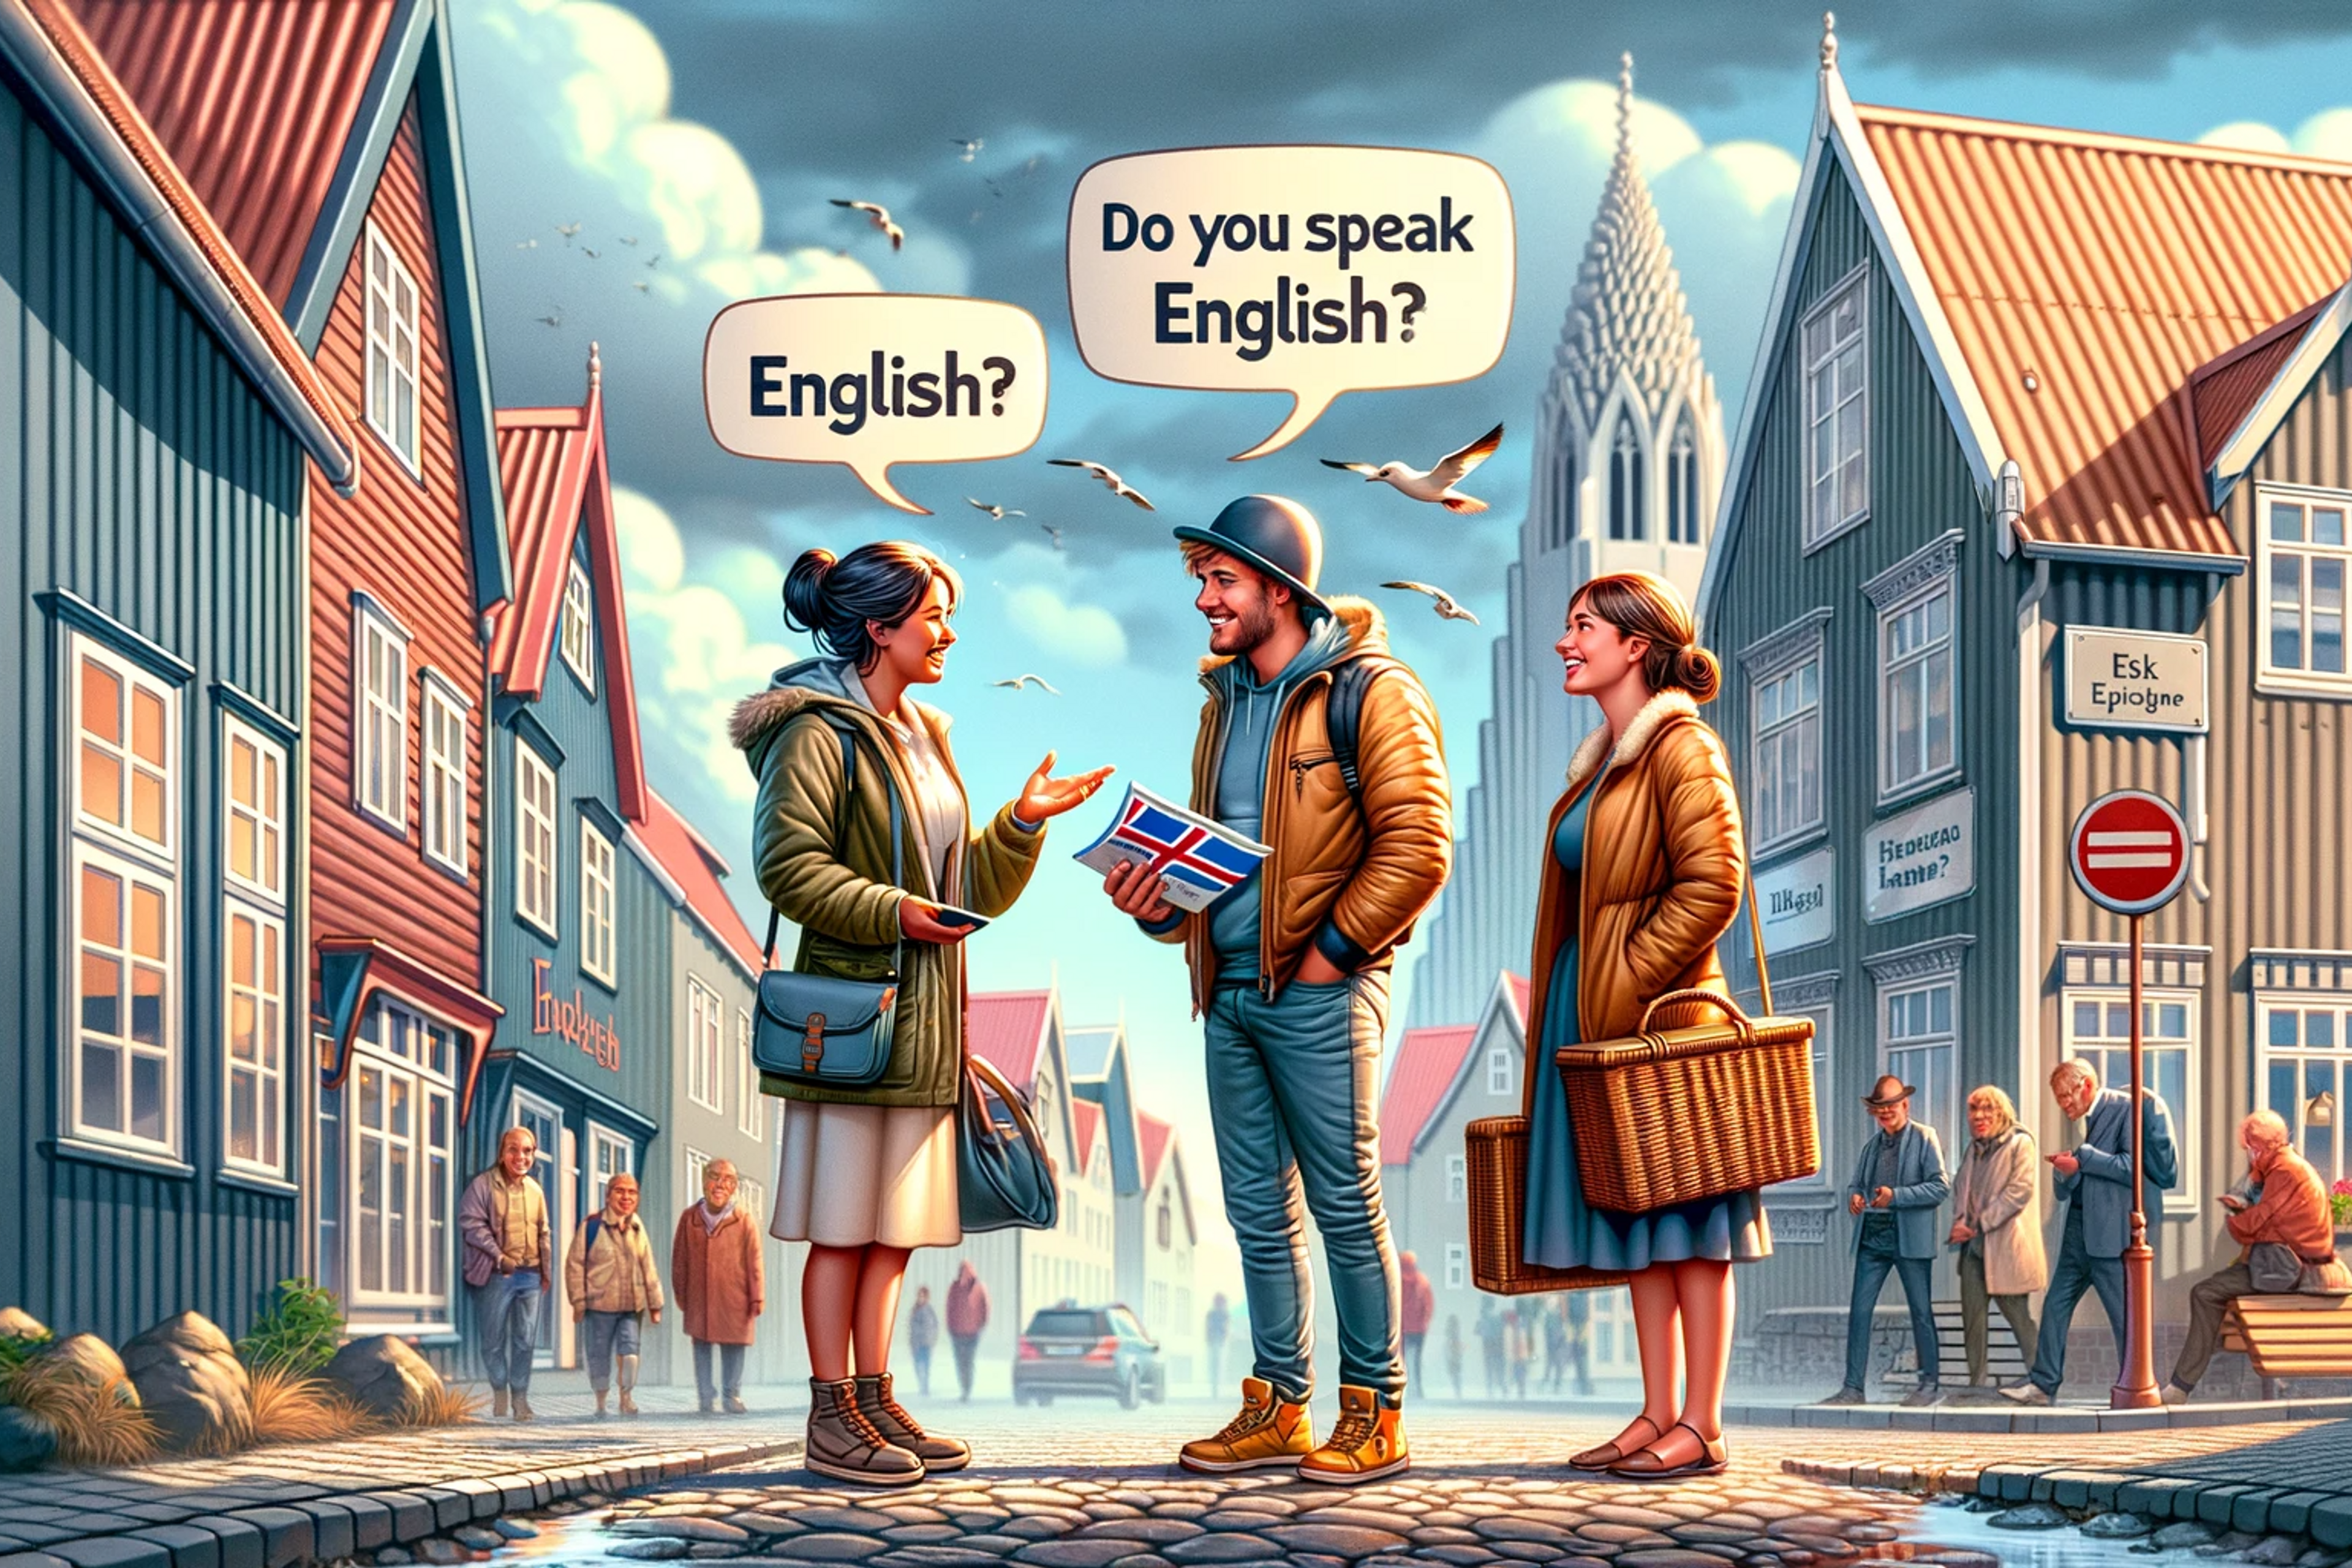 a tourist asks a local: Do you speak English